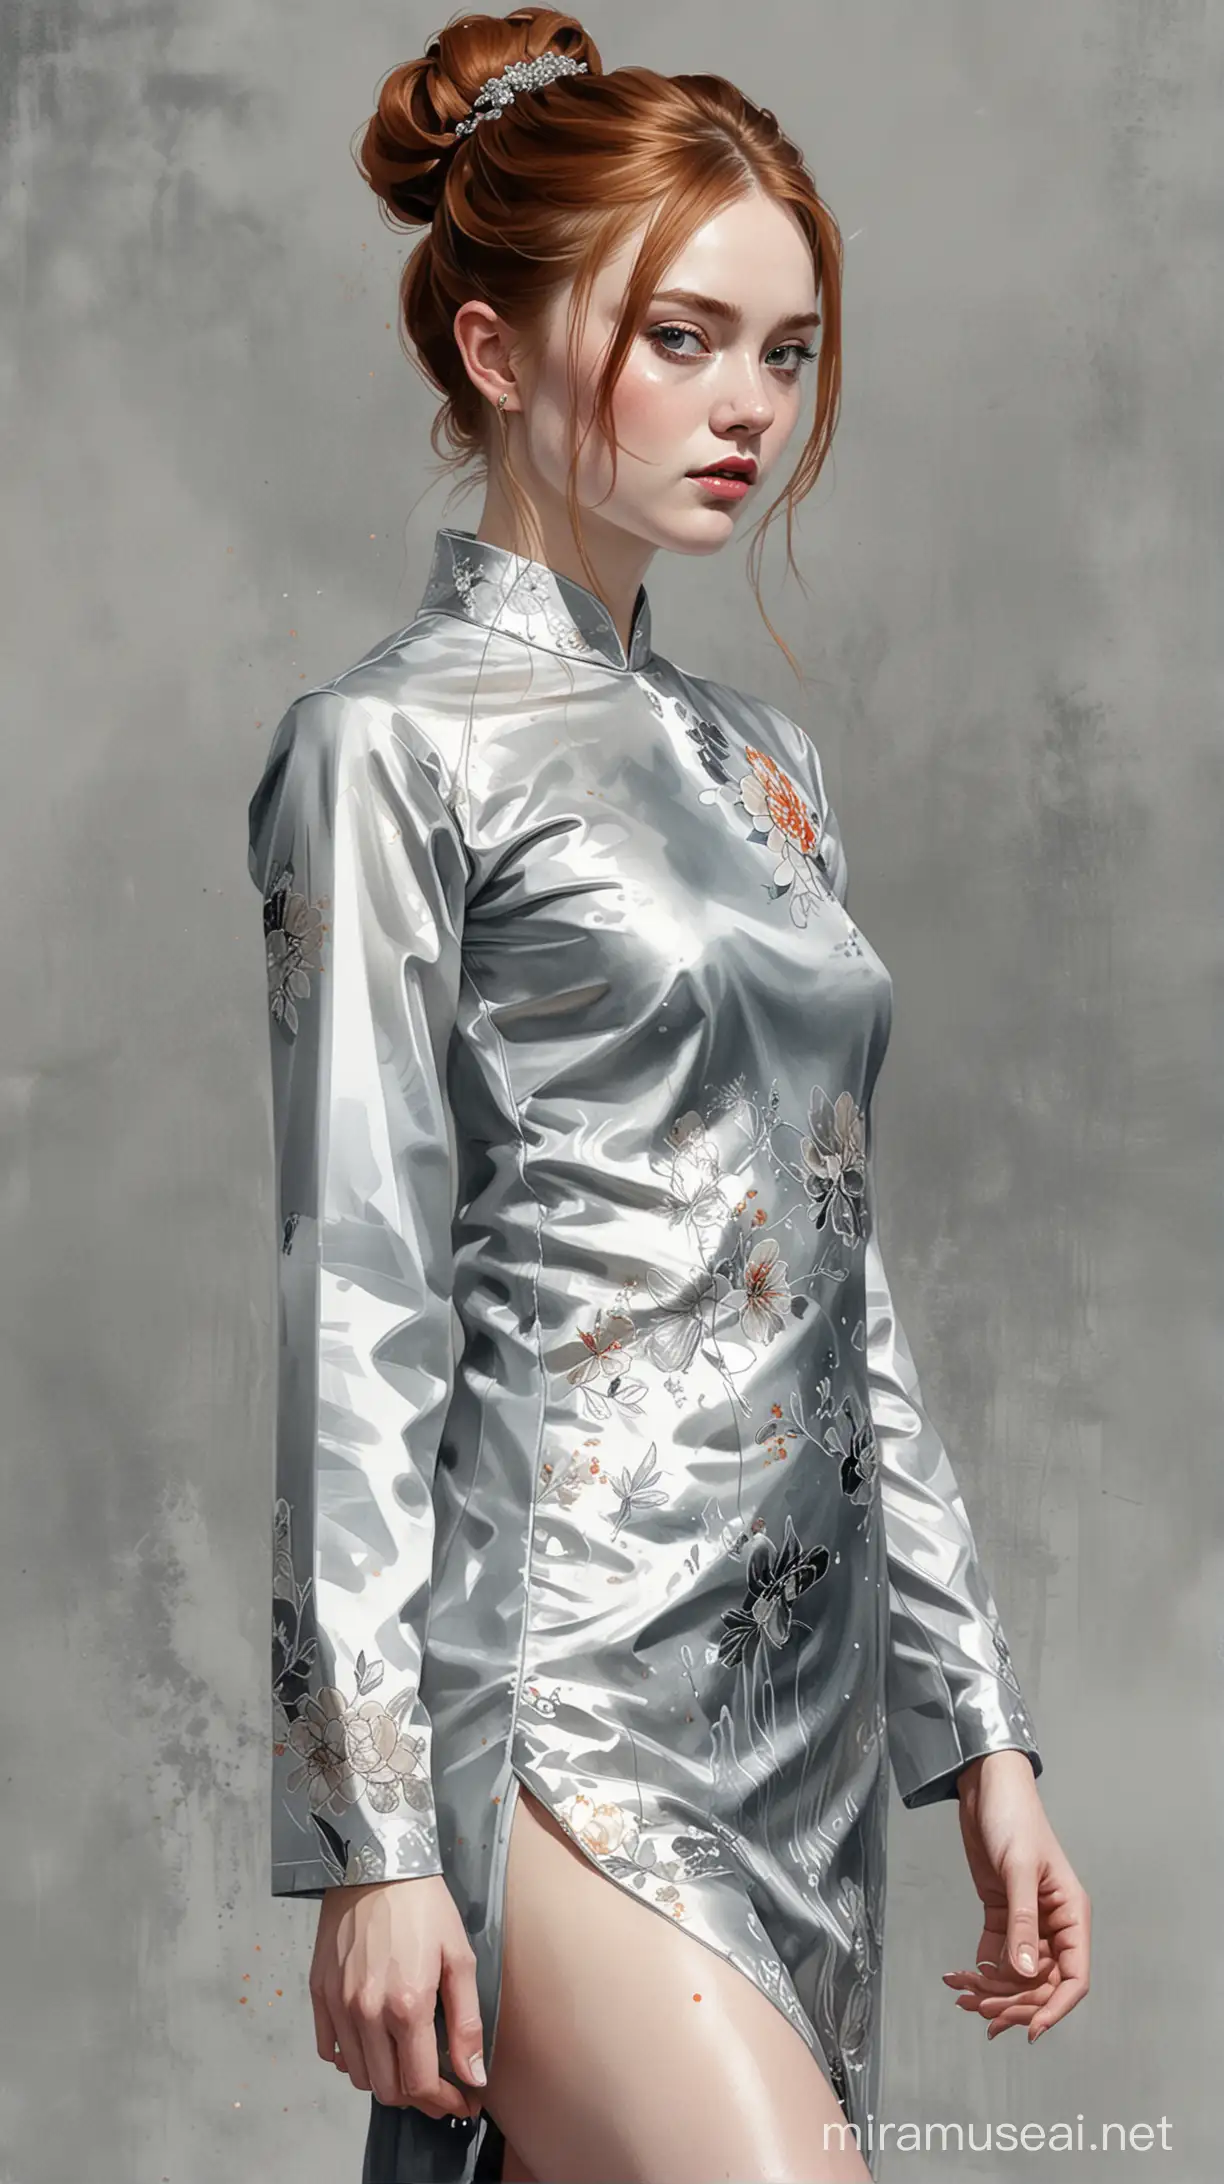 Sadie Sink in Silver Qipao Elegant Watercolor Portrait Illustration